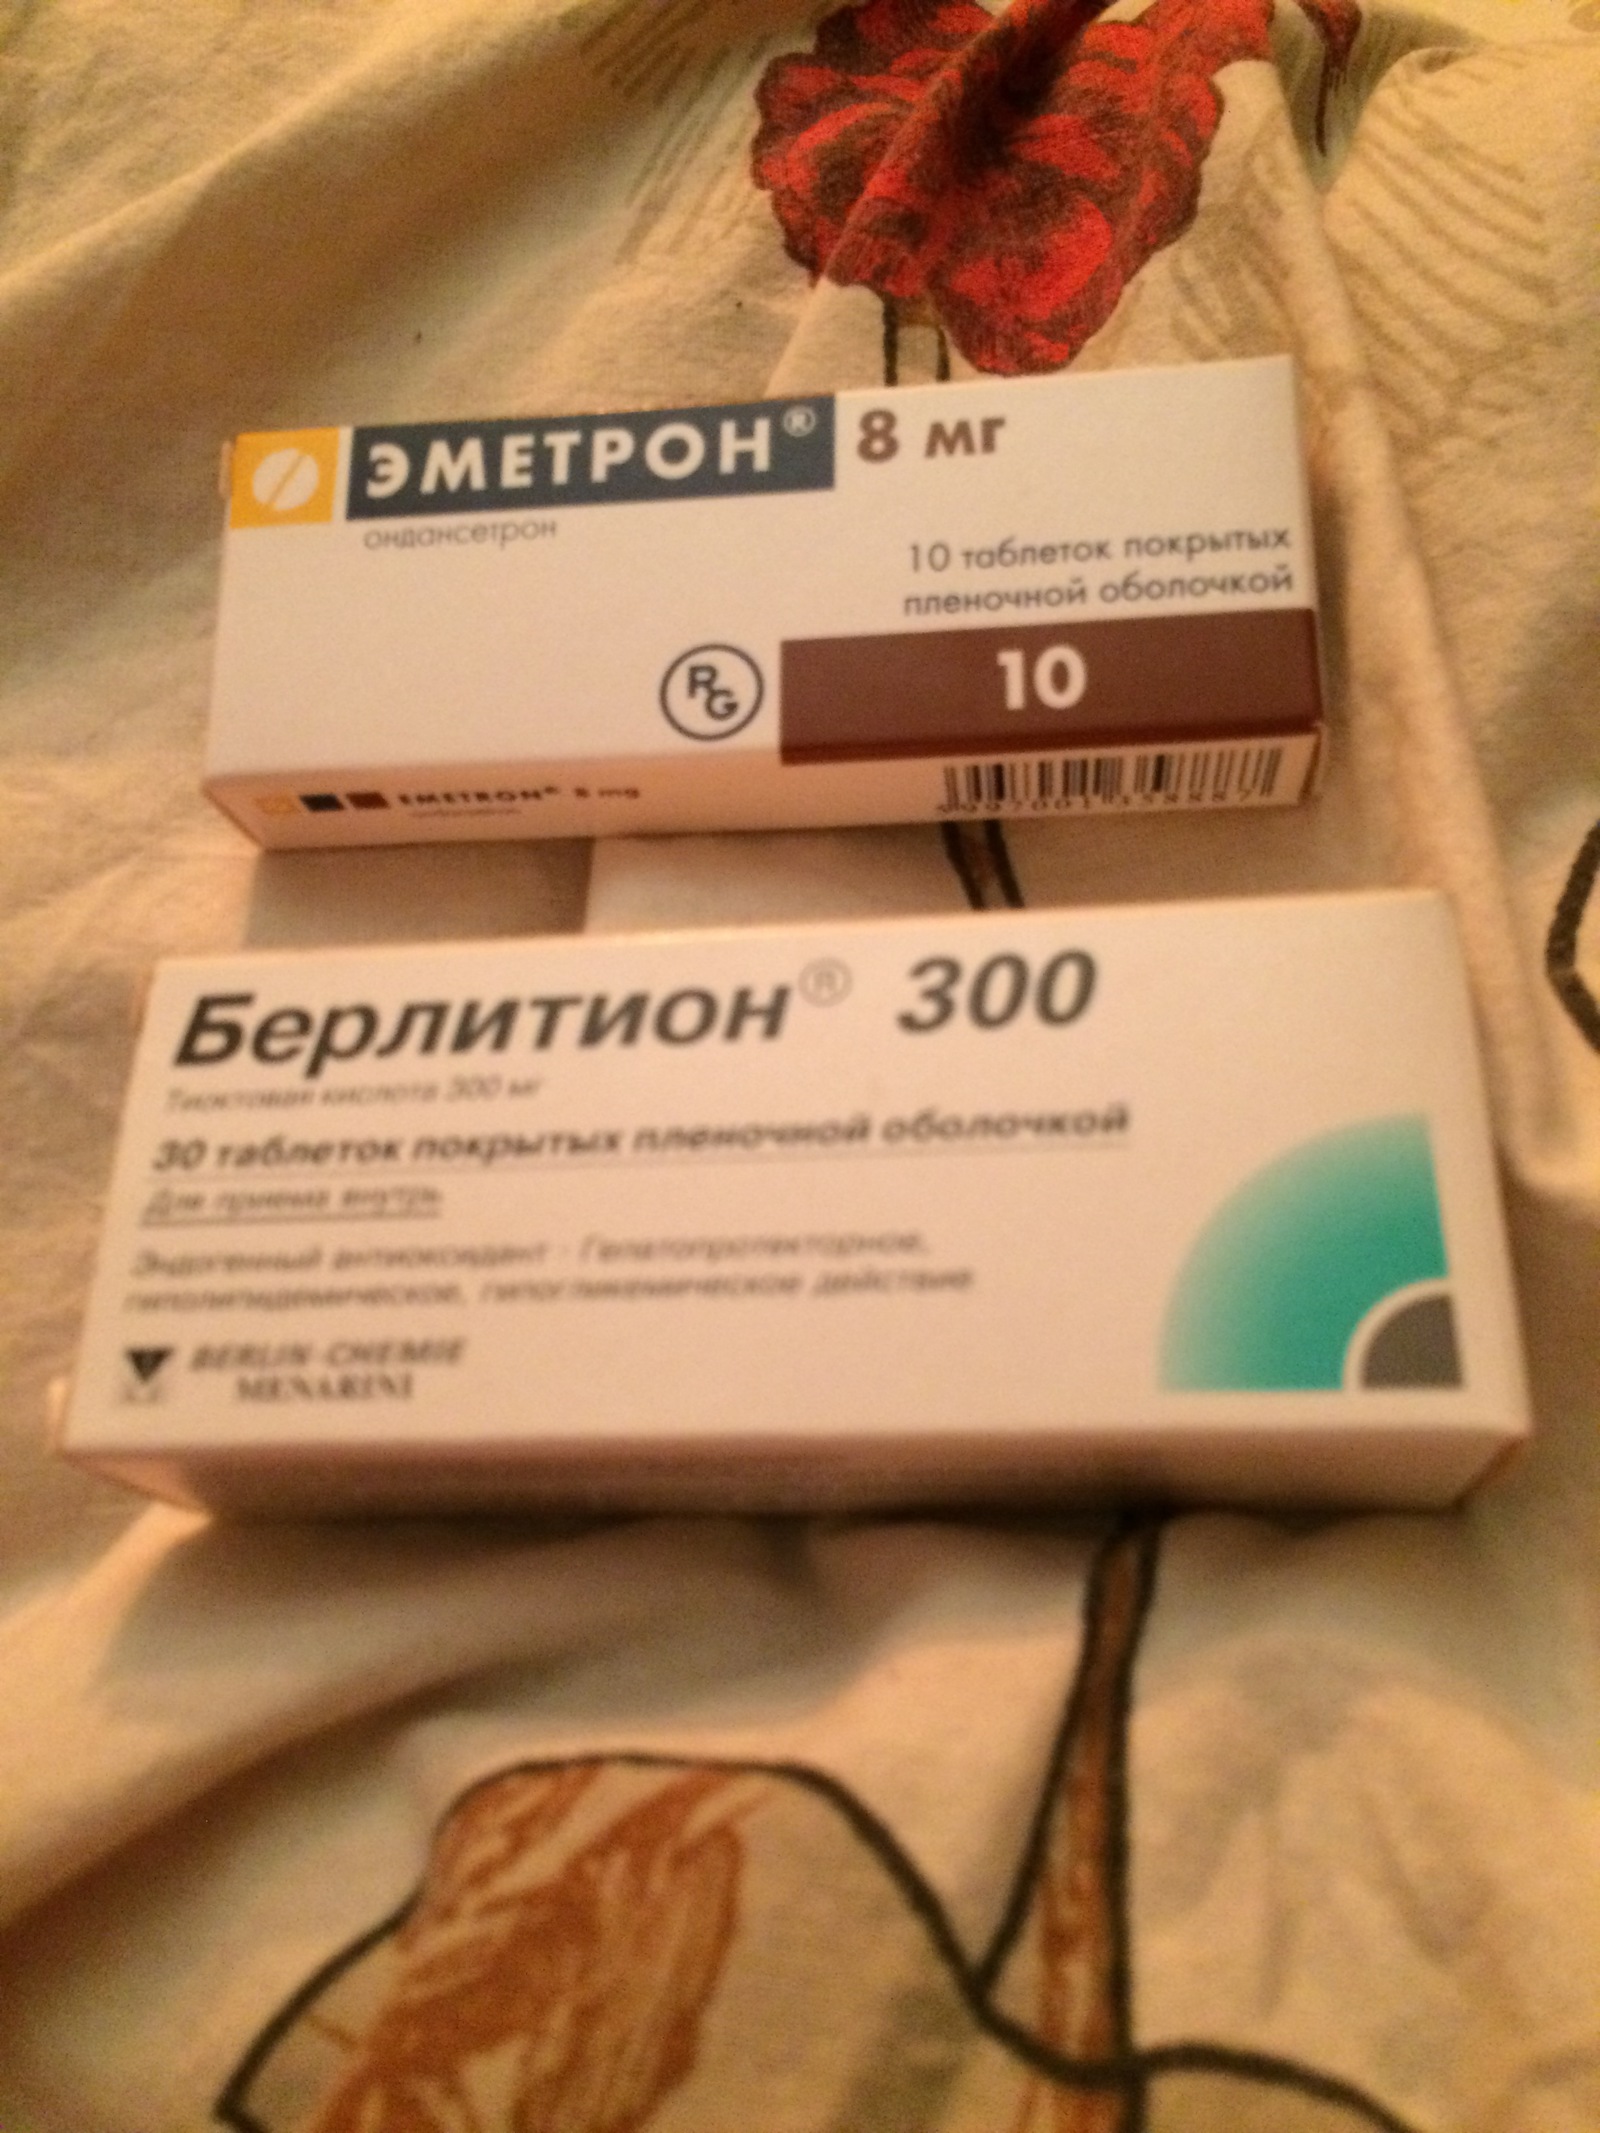 I'll give you the medicine. Saratov - I will give the medicine, 